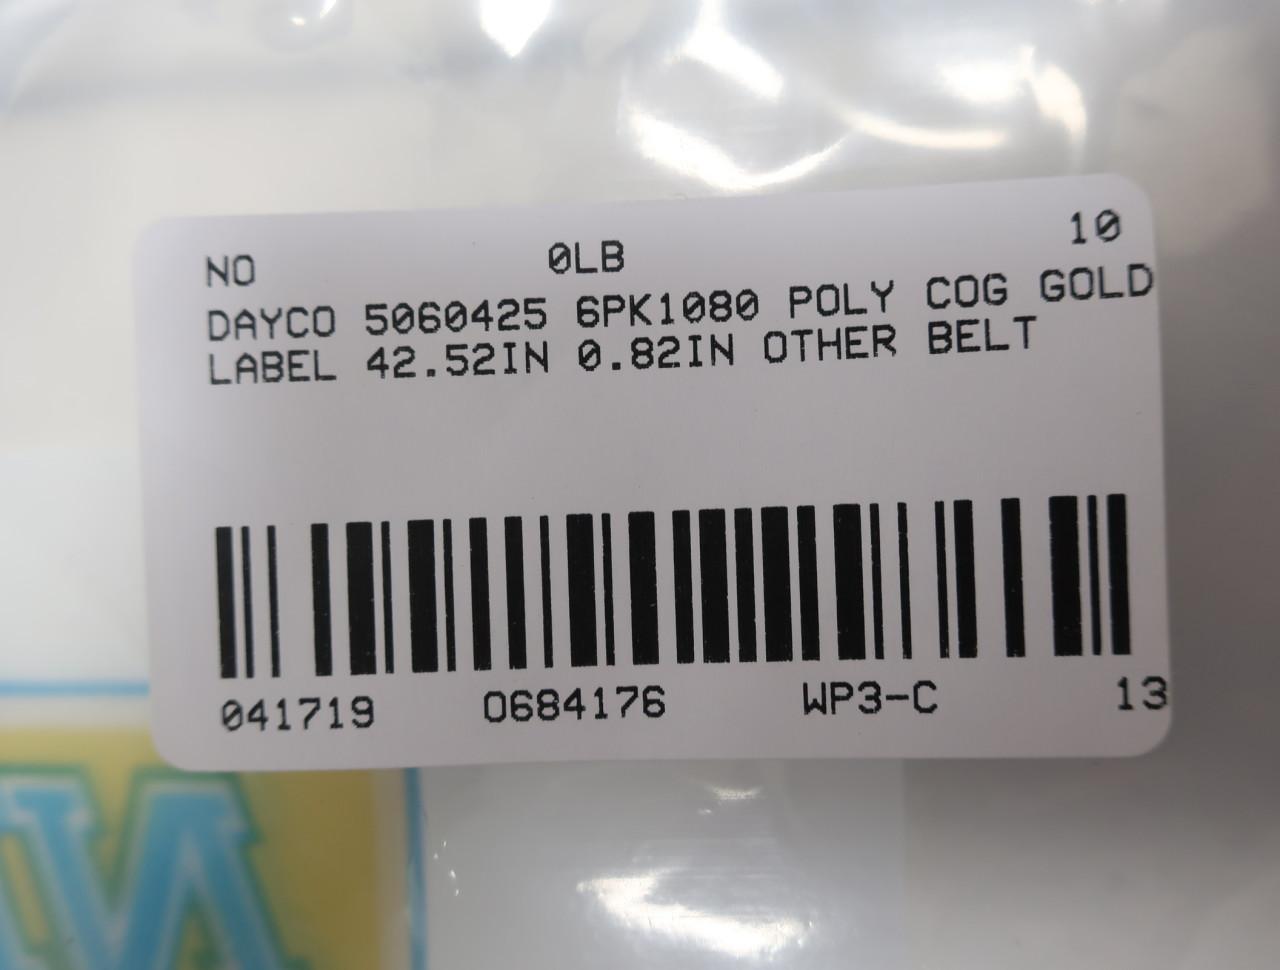 Dayco 5060425 6PK1080 Poly Cog Gold Label Serpentine 42.52in Belt 